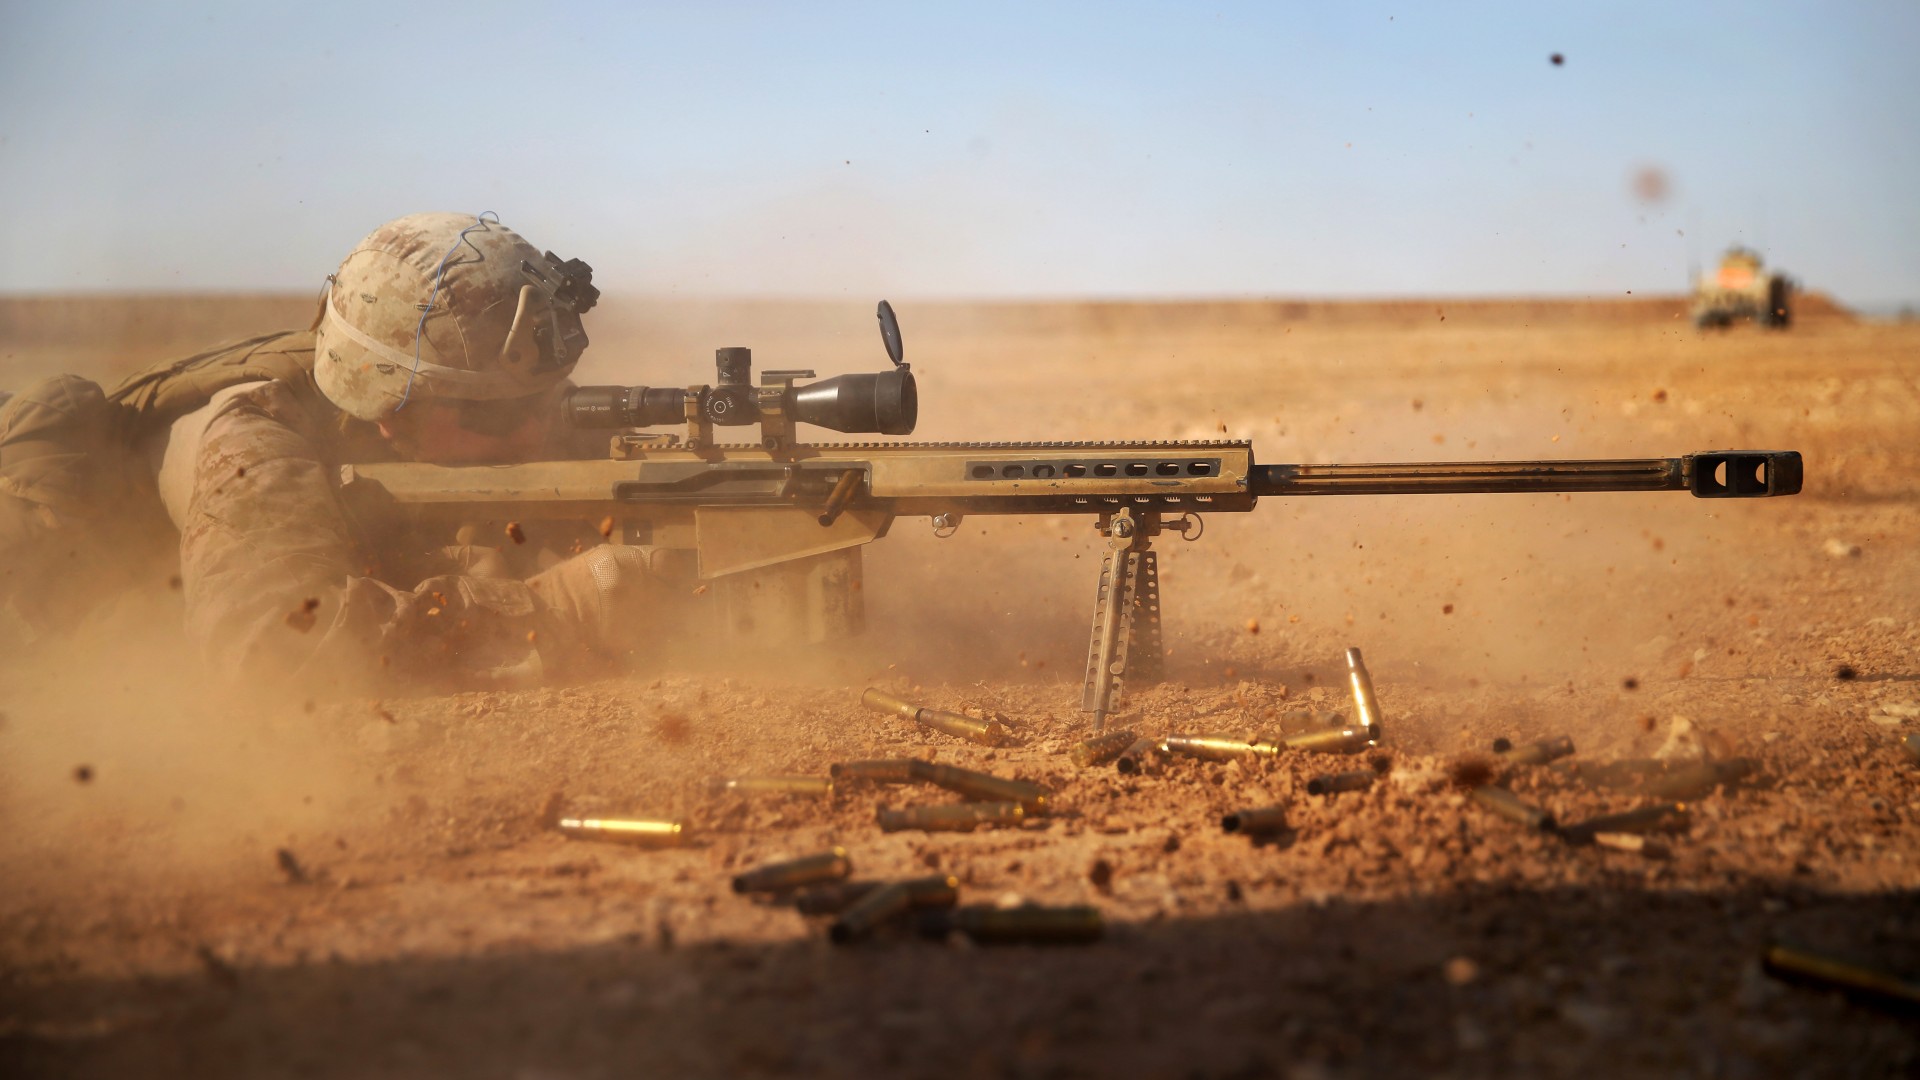 снайпер, солдат, пустыня, оптика, винтовка, Barrett, sniper, soldier, sniper rifle, M82, М107, Light fifty, U.S. Army, M82A1, scope, desert (horizontal)